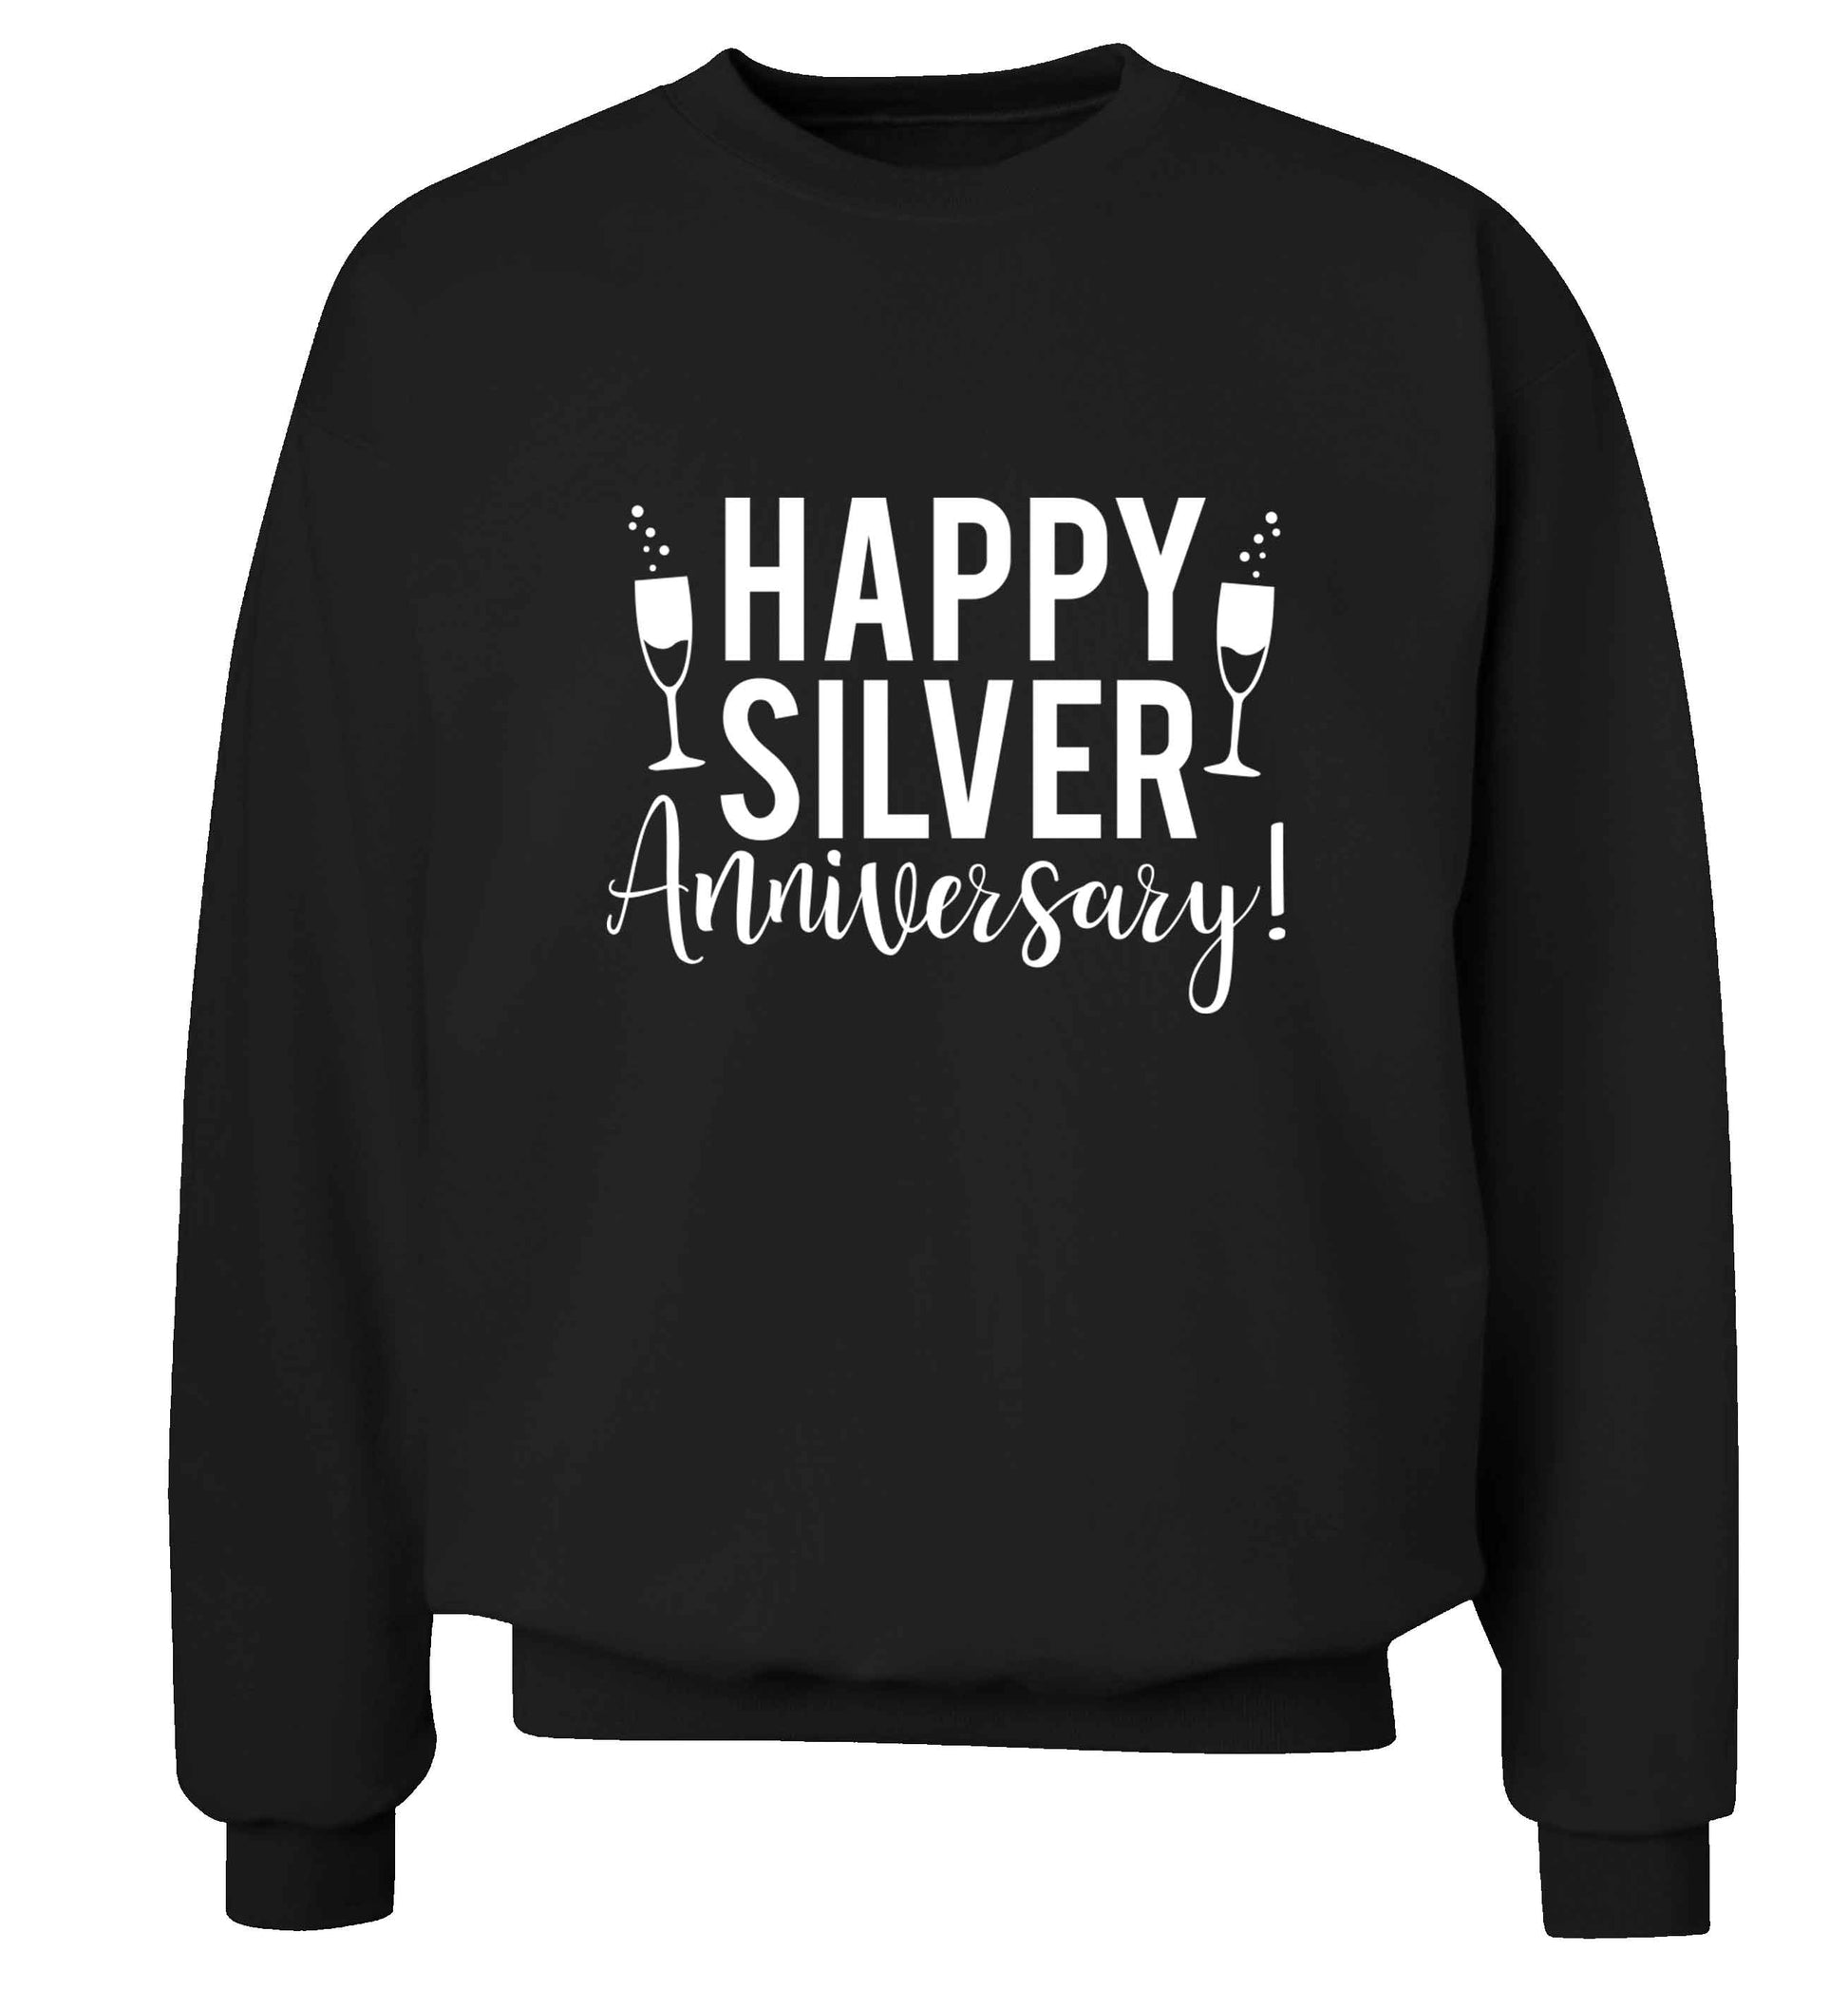 Happy silver anniversary! adult's unisex black sweater 2XL